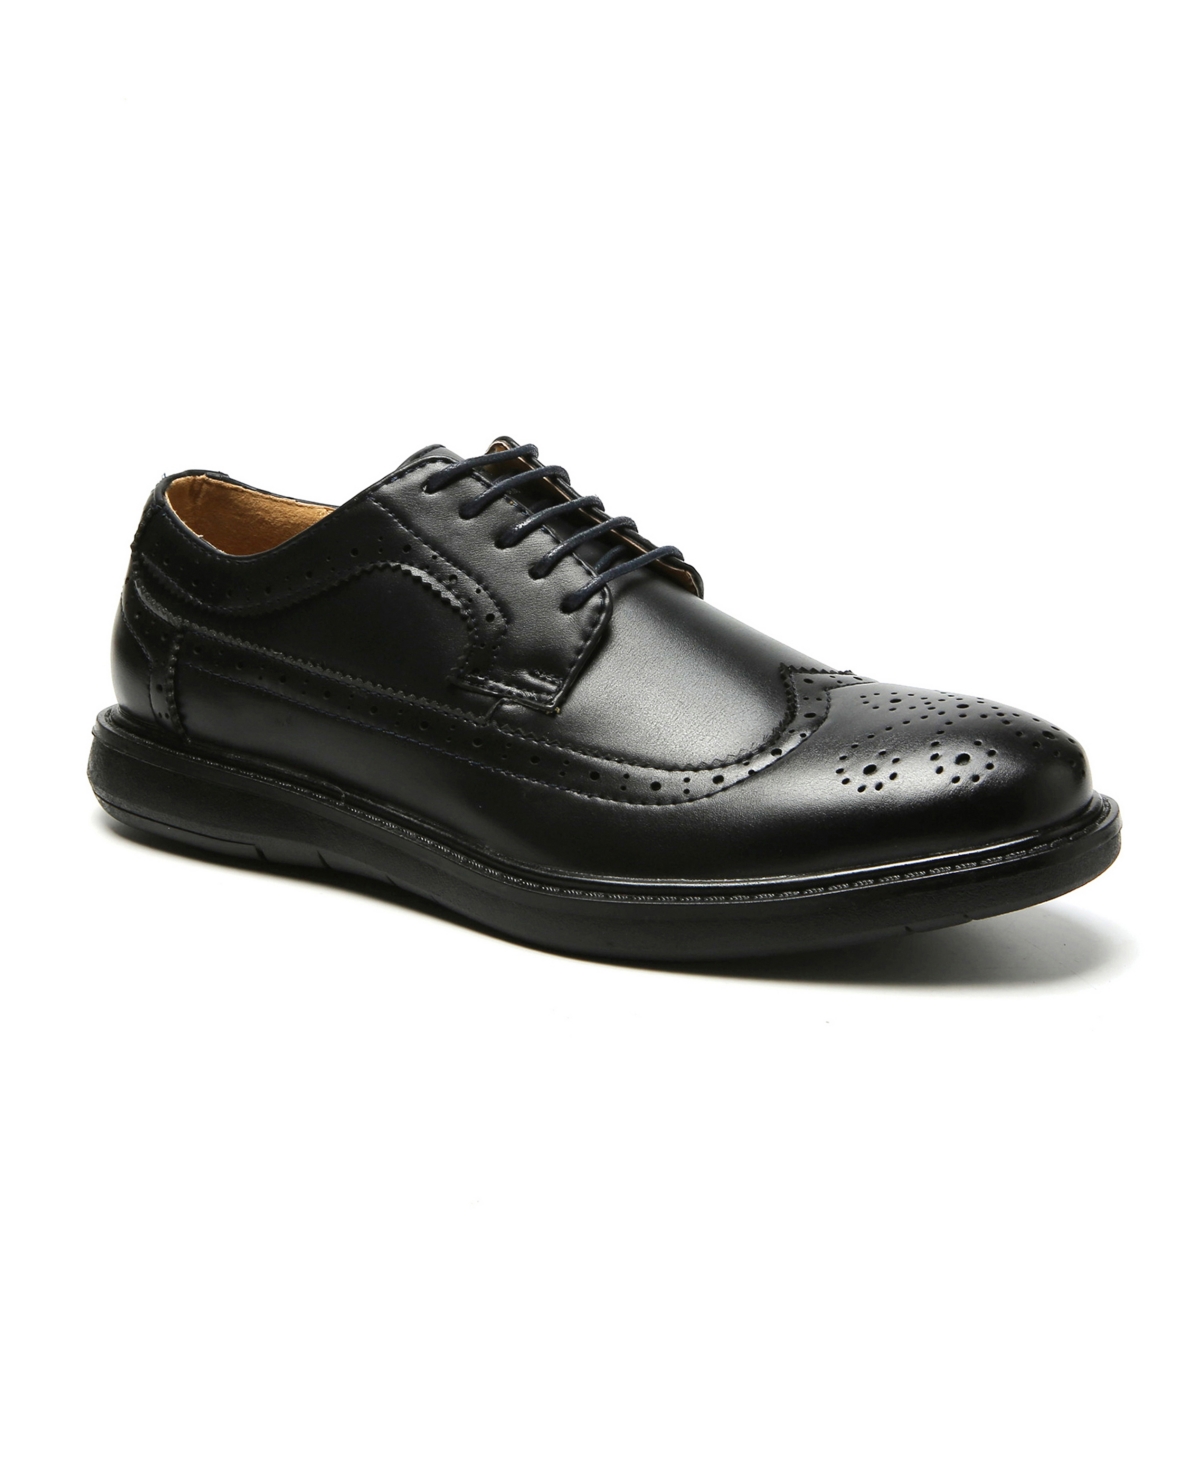 Men's Wingtip Oxfords Shoes - Navy